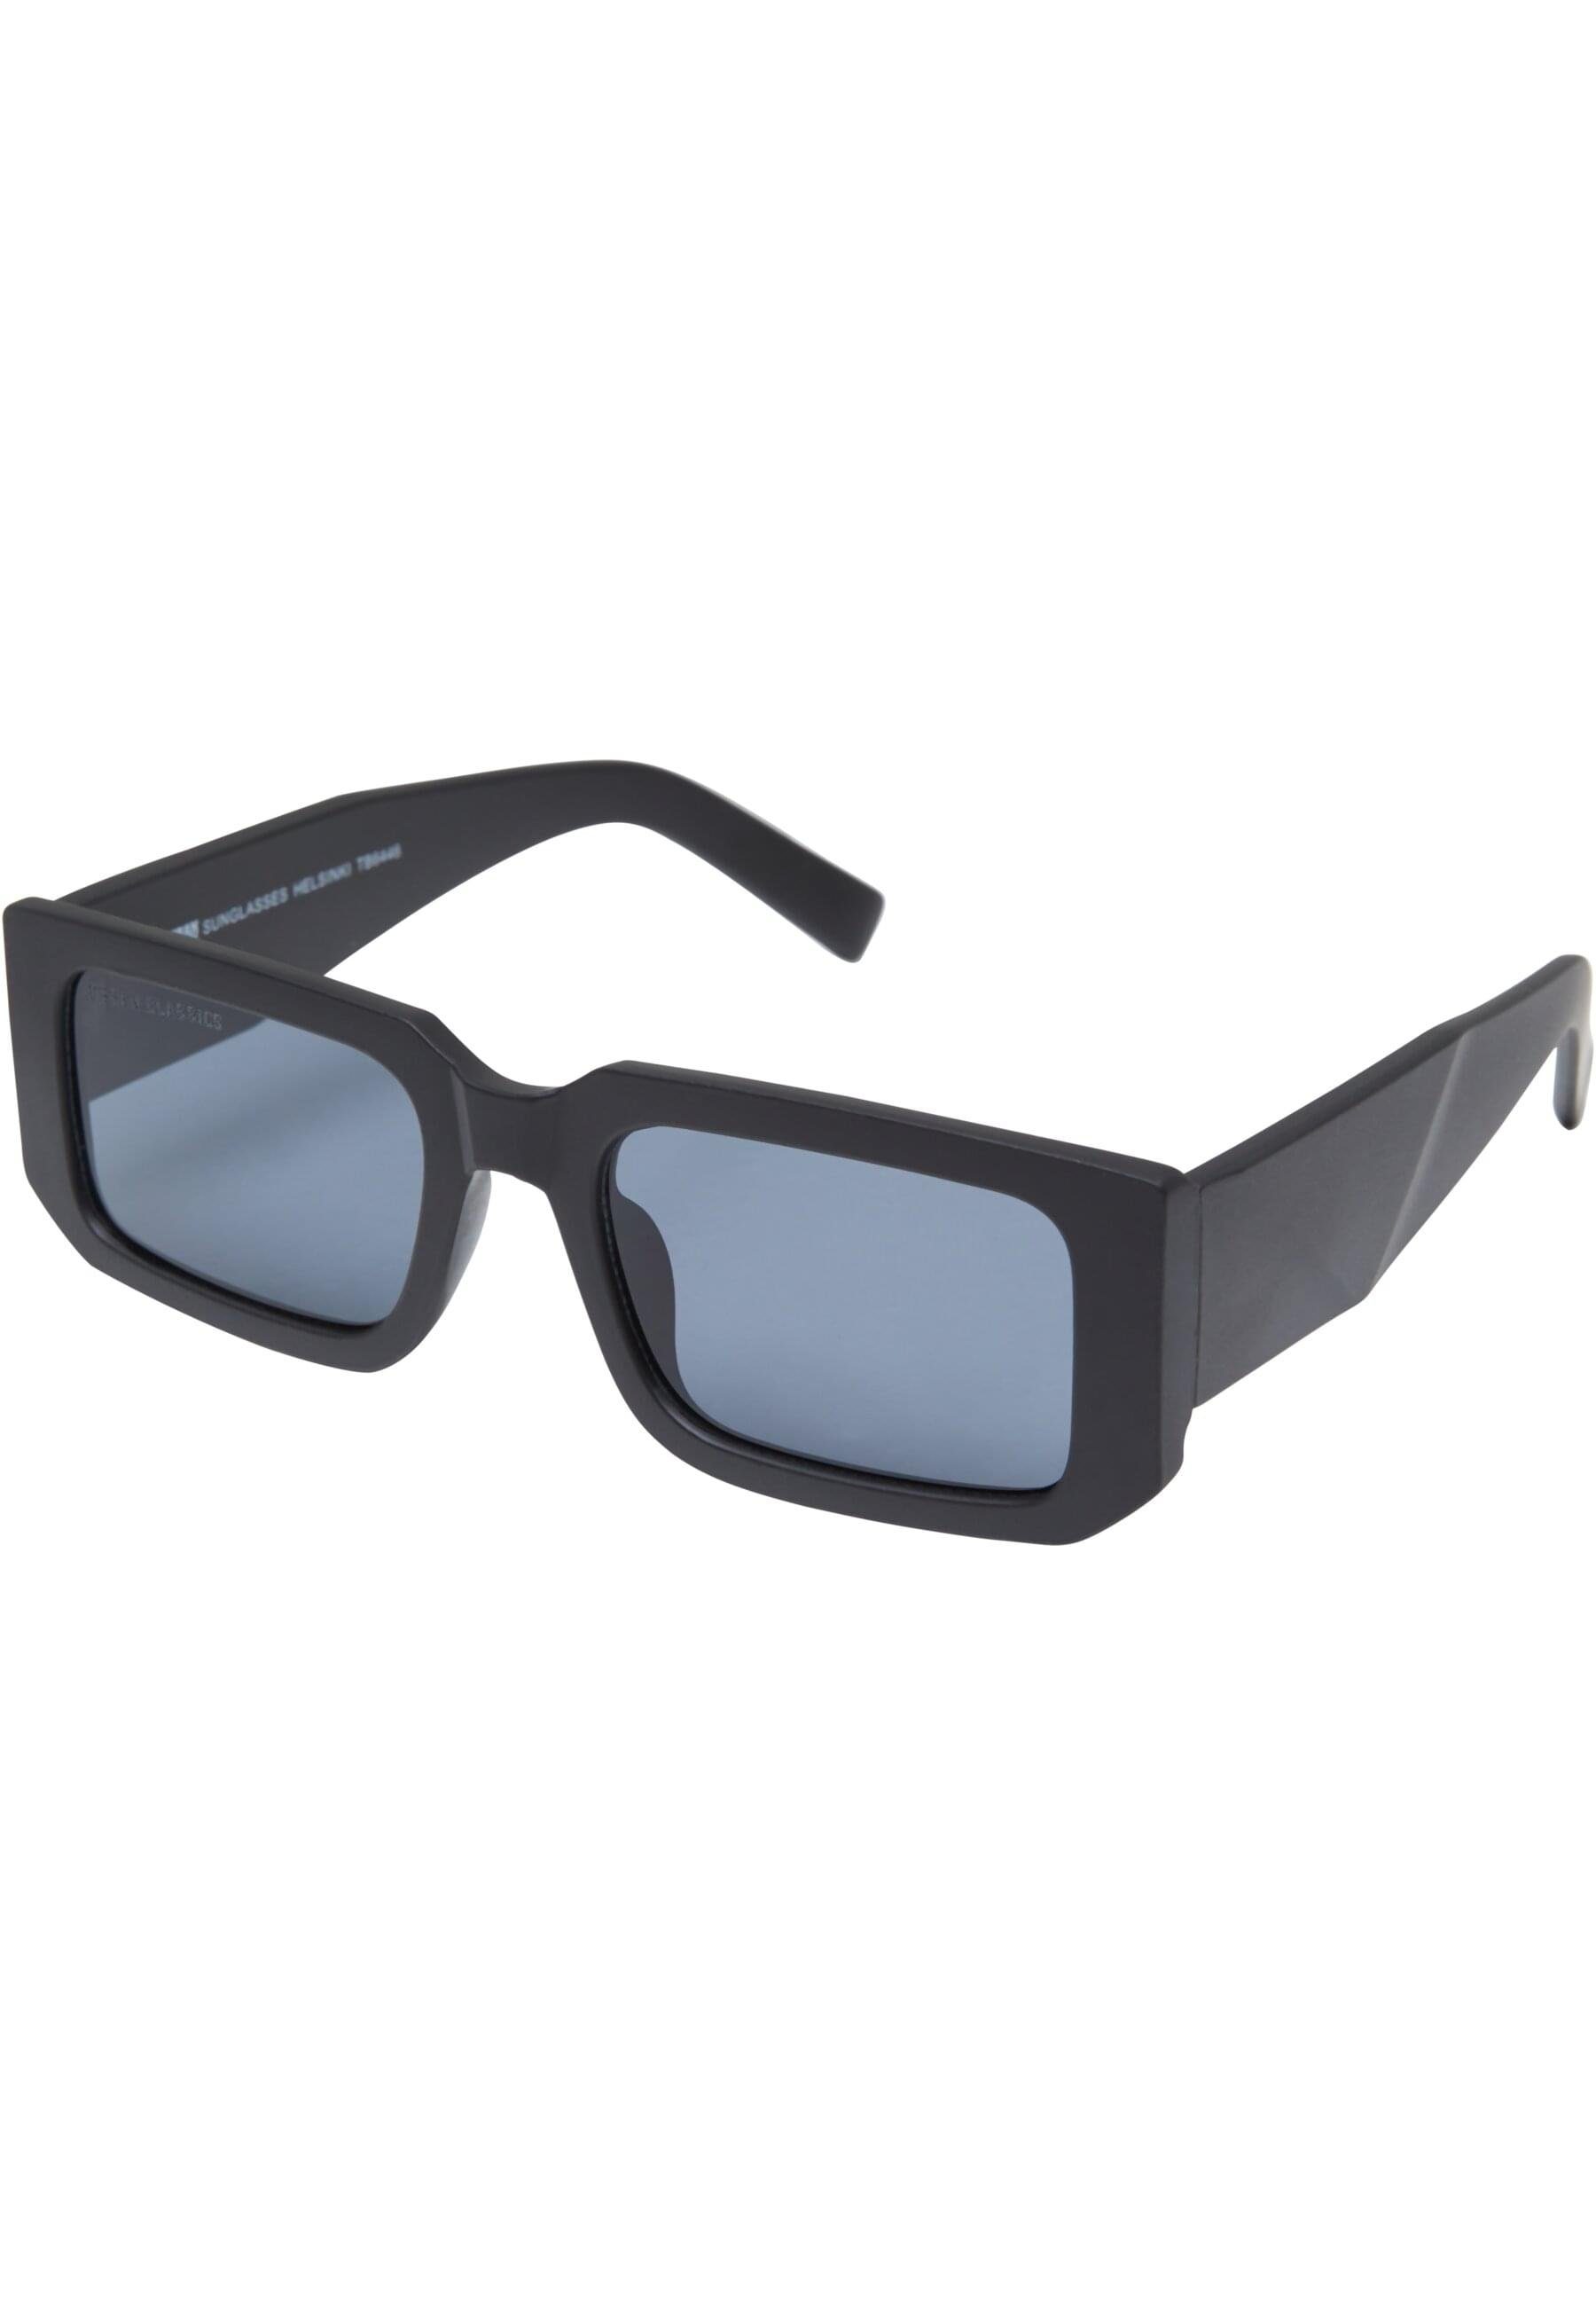 Sunglasses black Unisex Helsinki URBAN CLASSICS Sonnenbrille